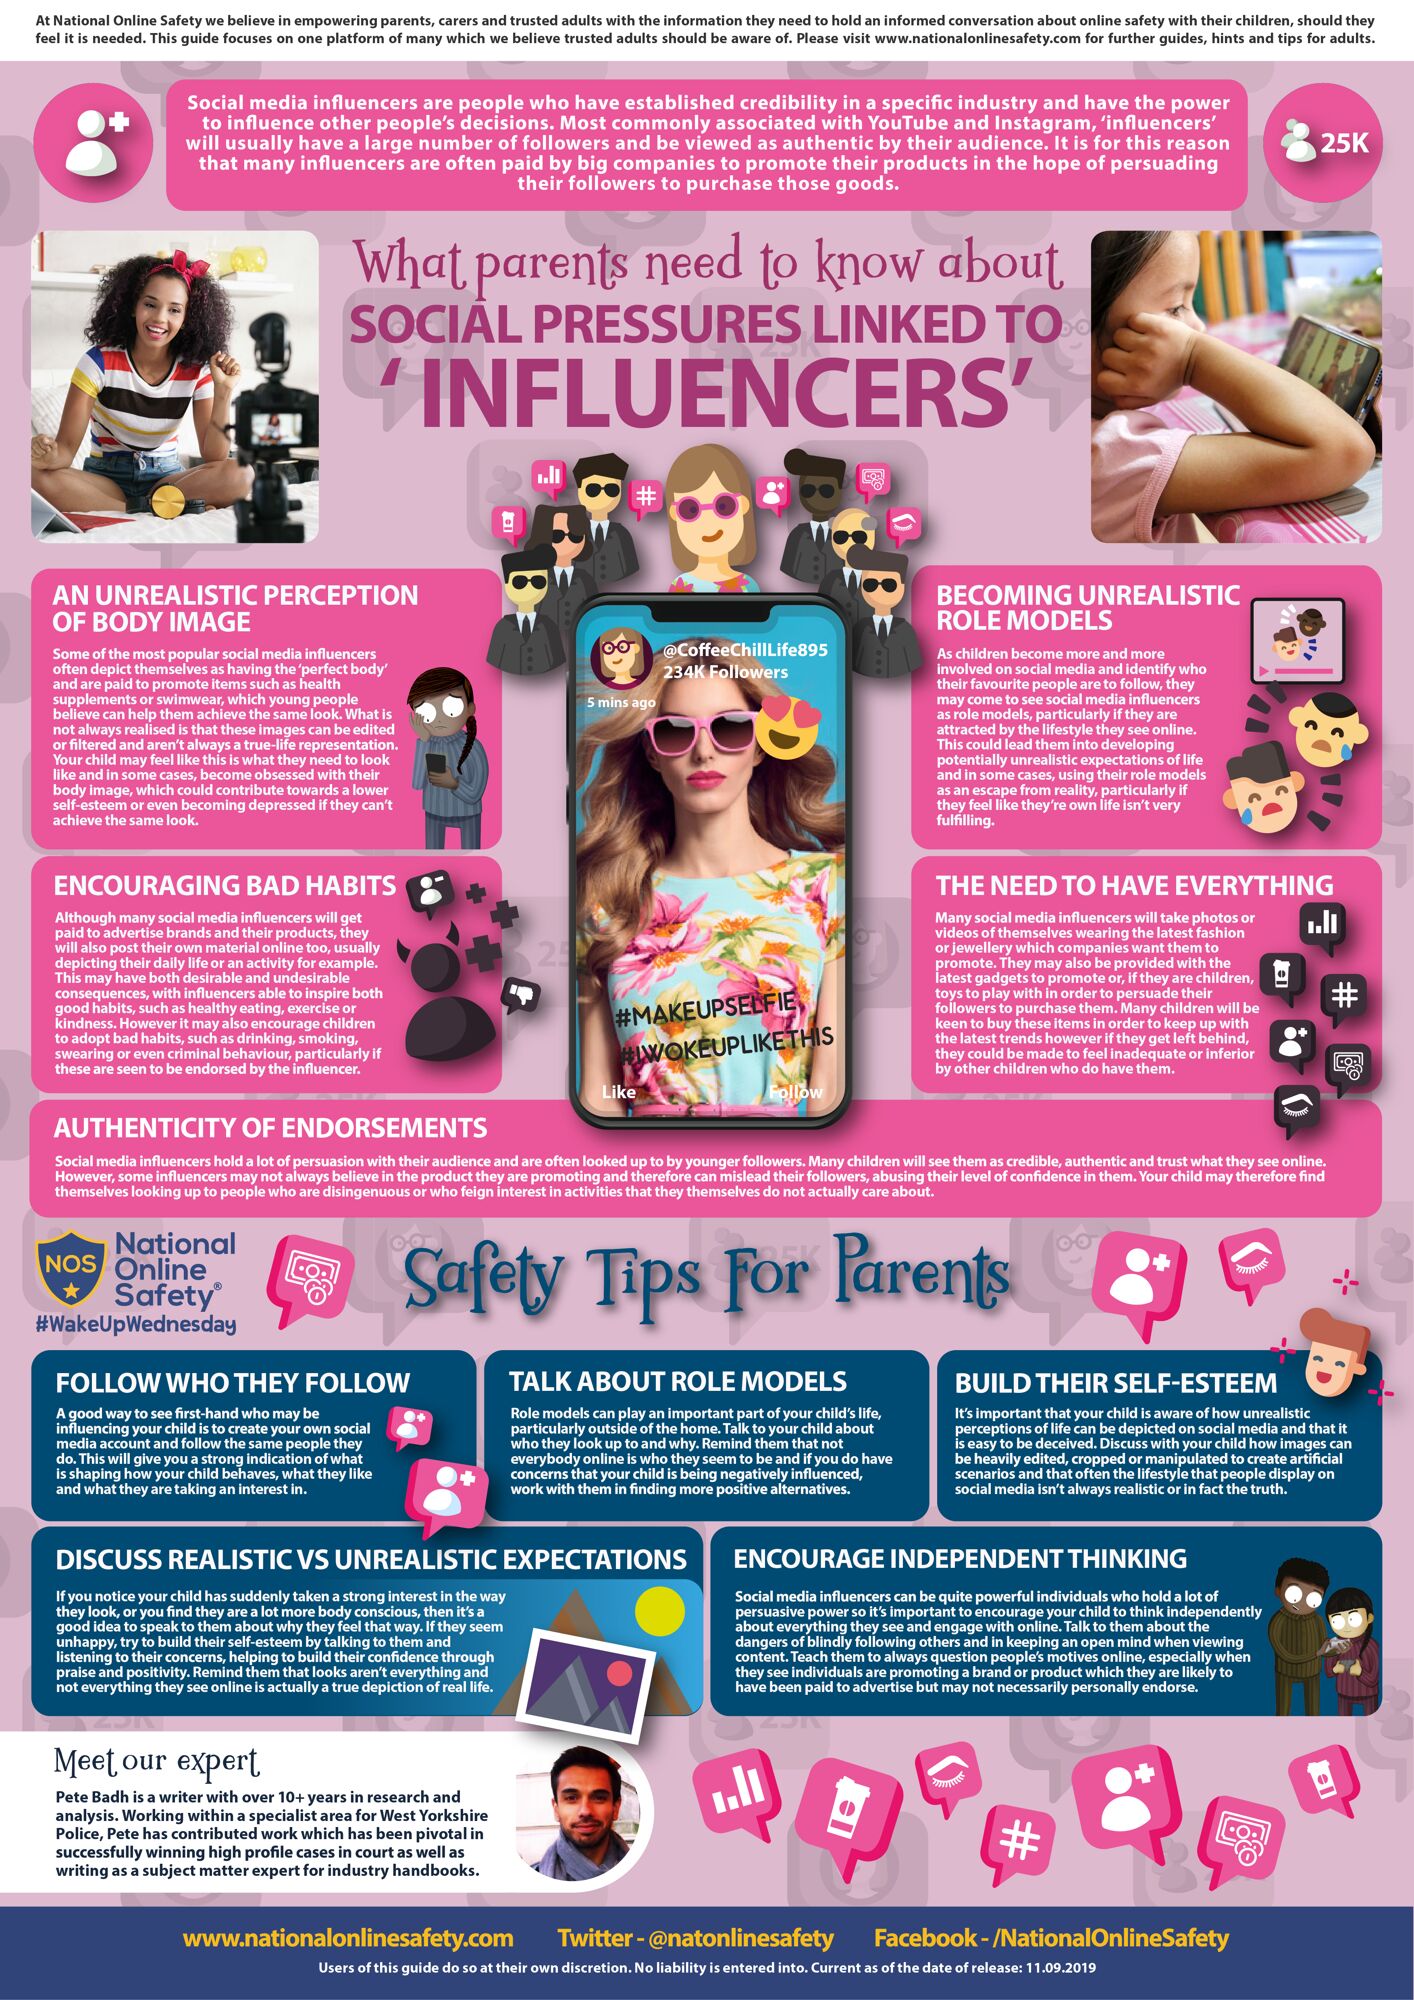 Social pressures linked to social media influencers